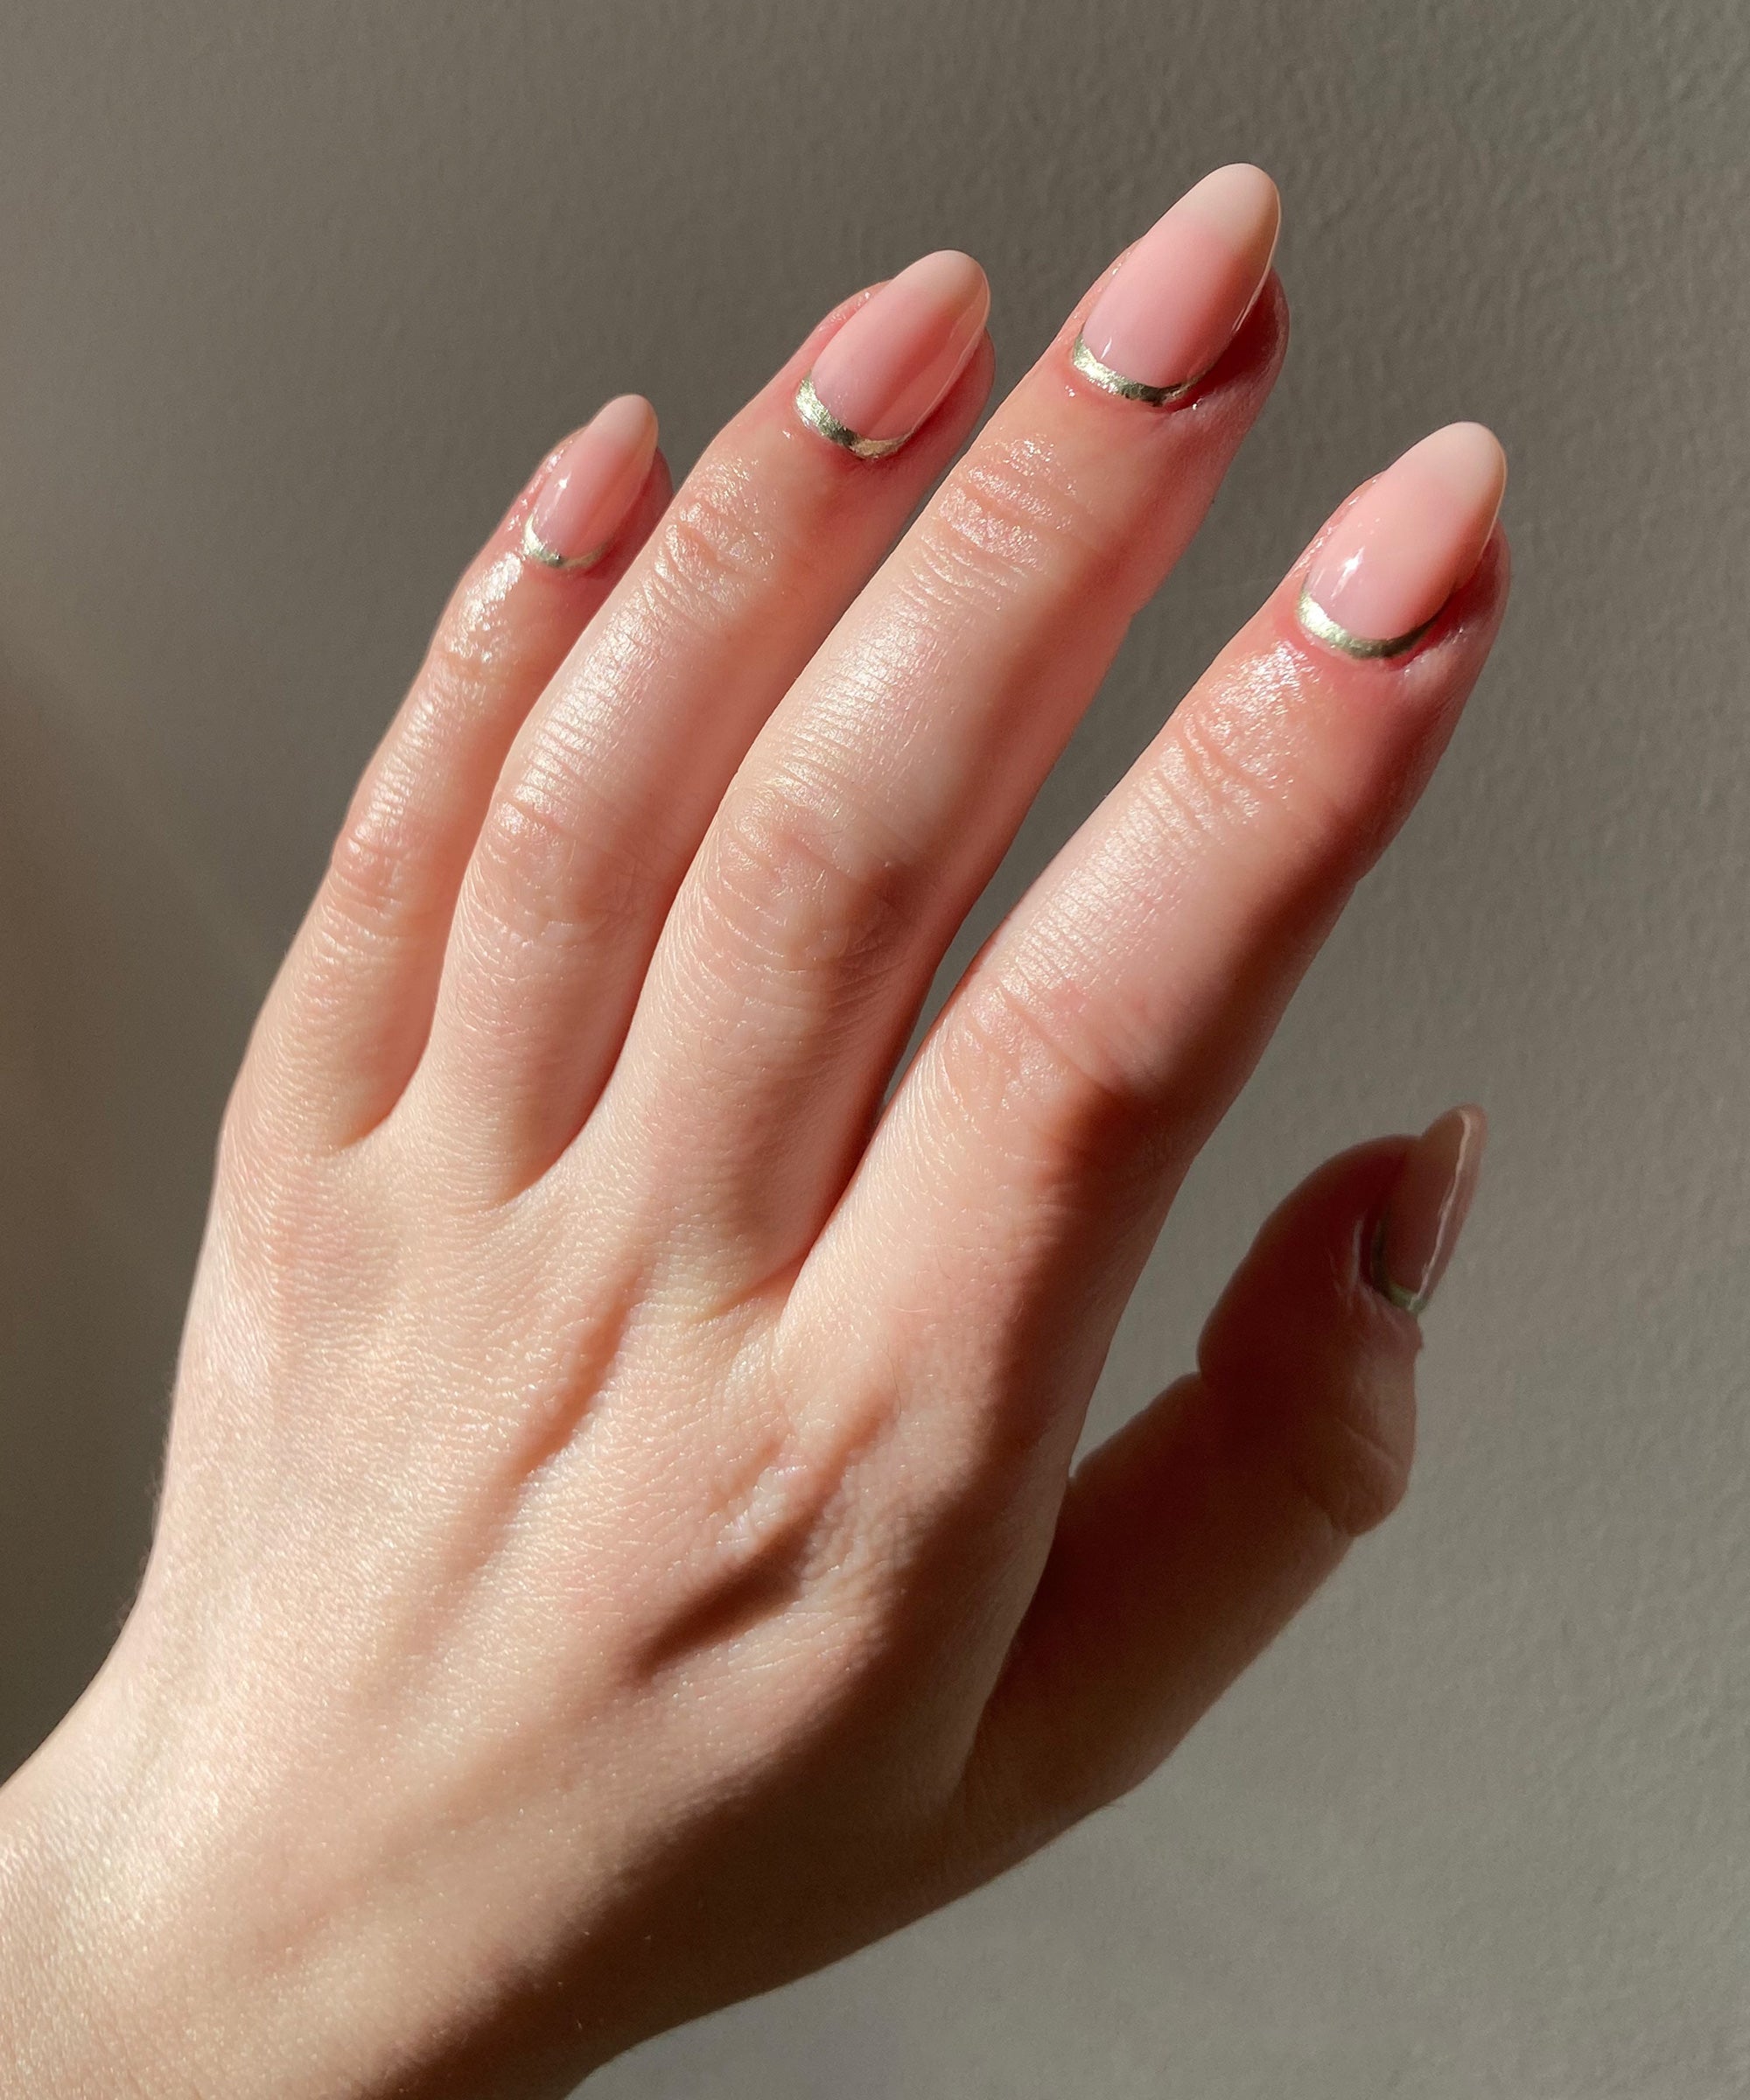 Update 157+ clean nail polish